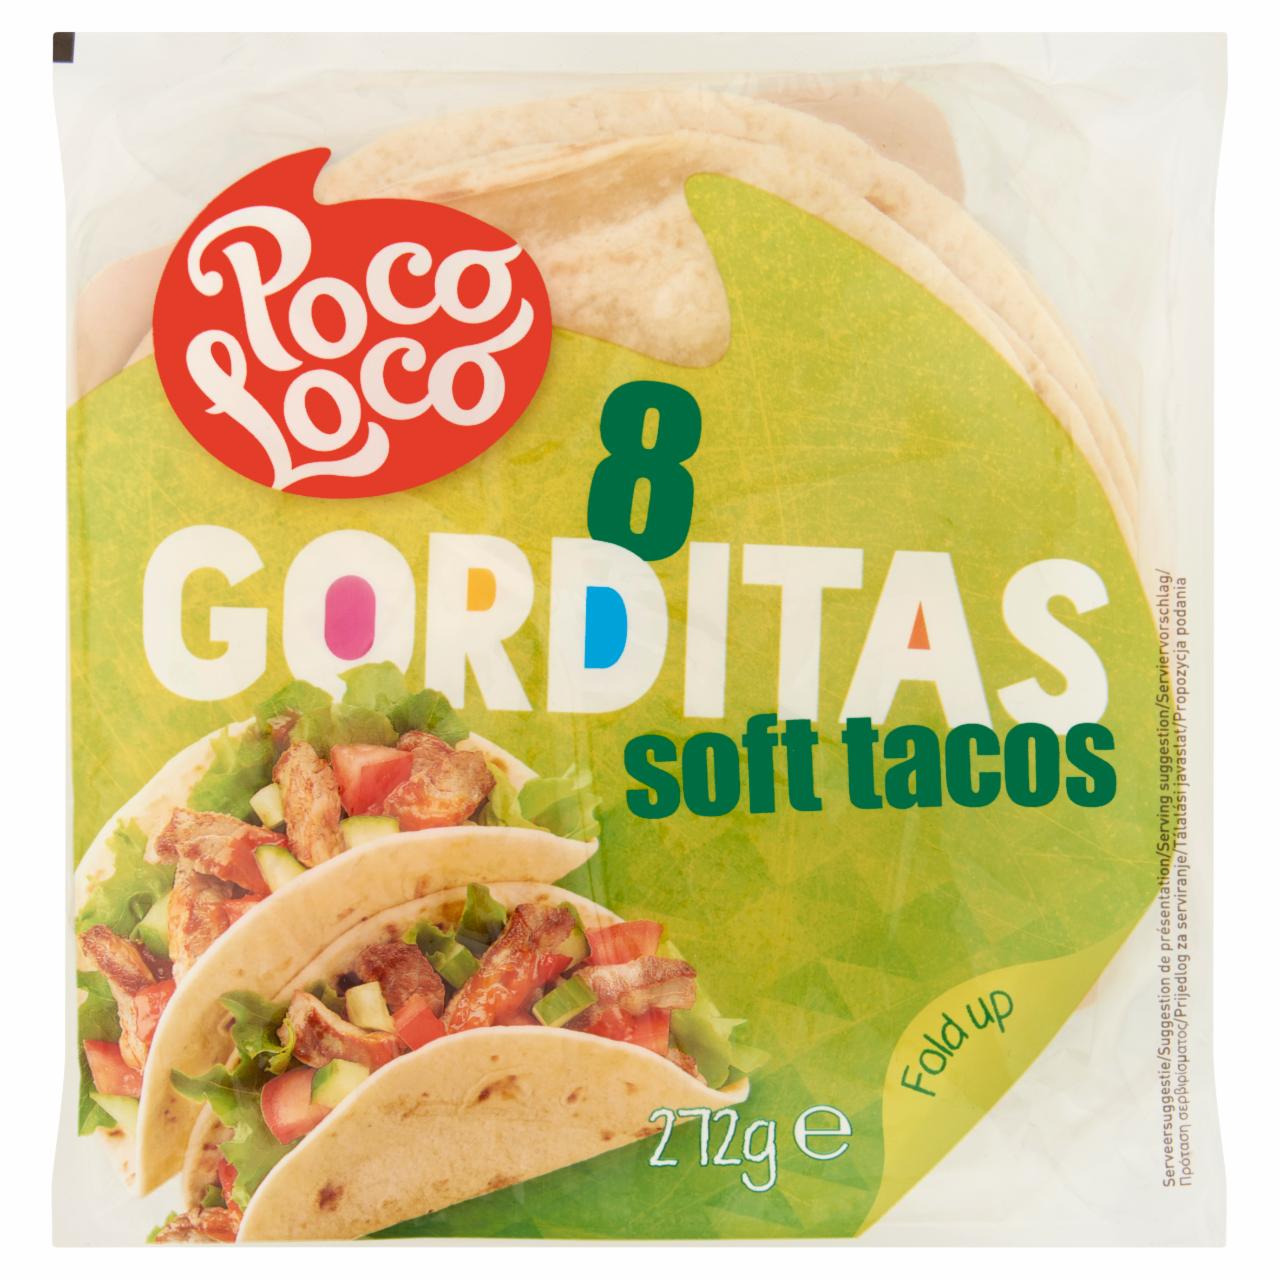 Képek - Poco Loco Gorditas Soft taco búzalisztből 8 db 272 g